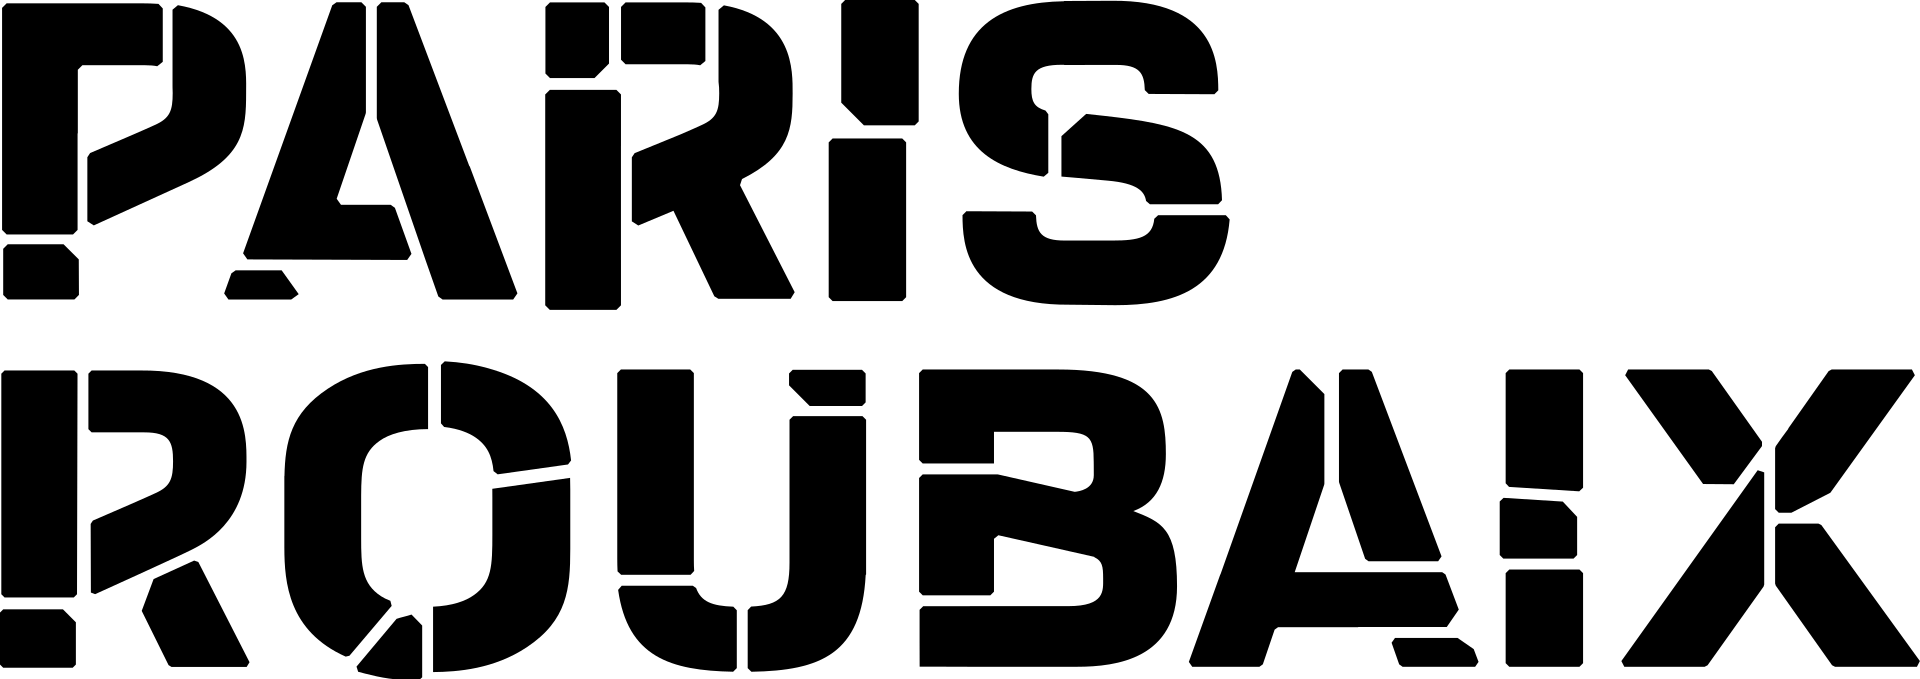 France Hd Logo Football - Paris Roubaix 2018 Logo (1920x679)